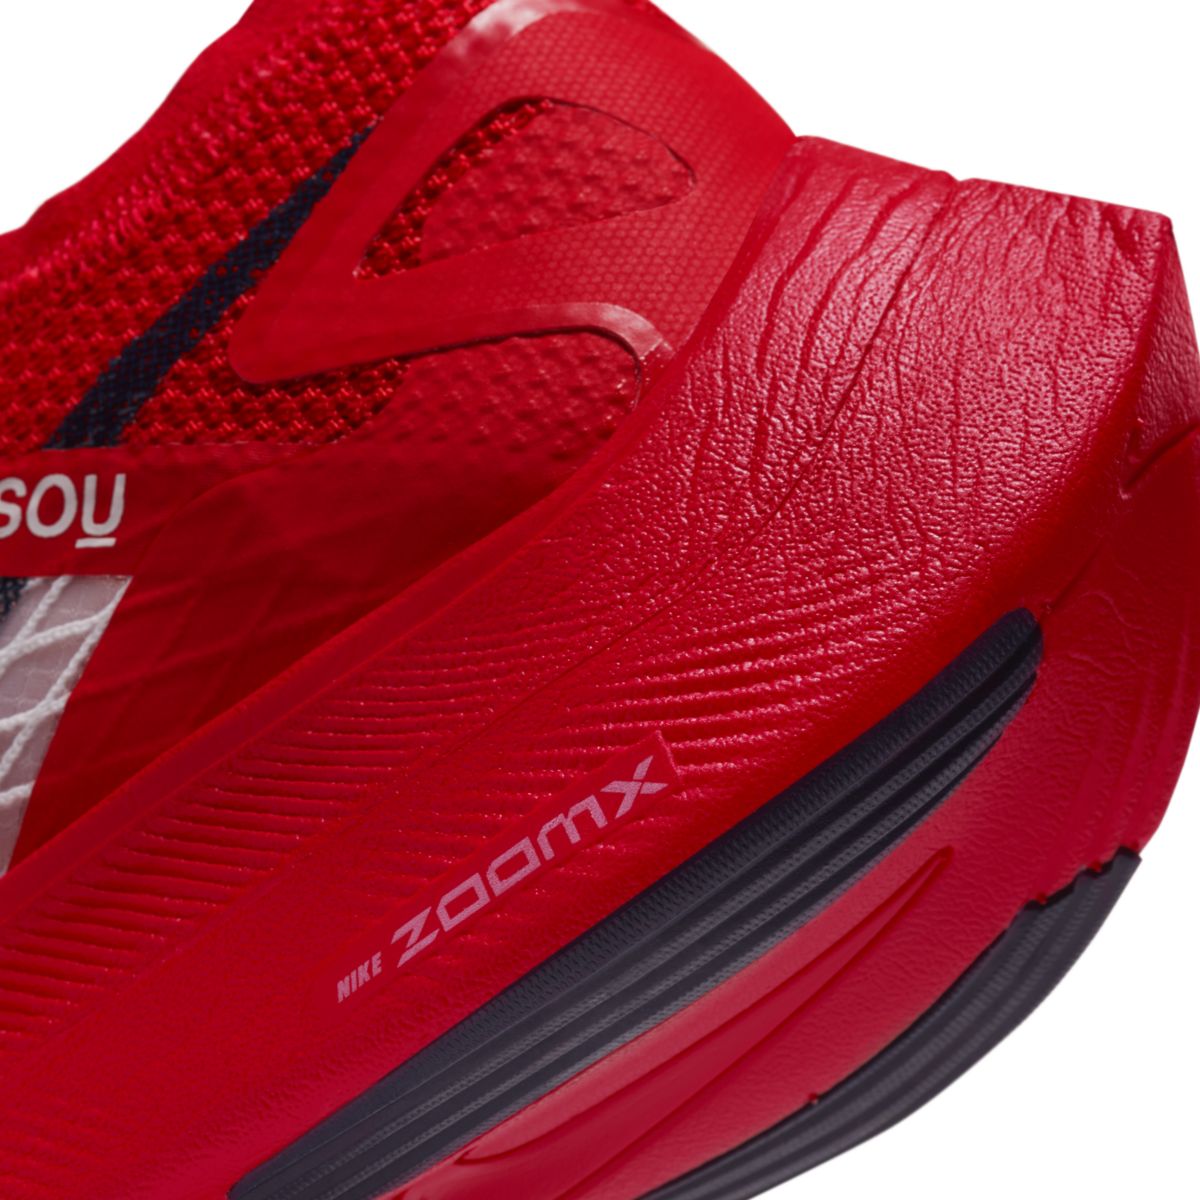 Undercover x Nike ZoomX VaporFly NEXT% 2 Gyakusou Red CT4894-600 8